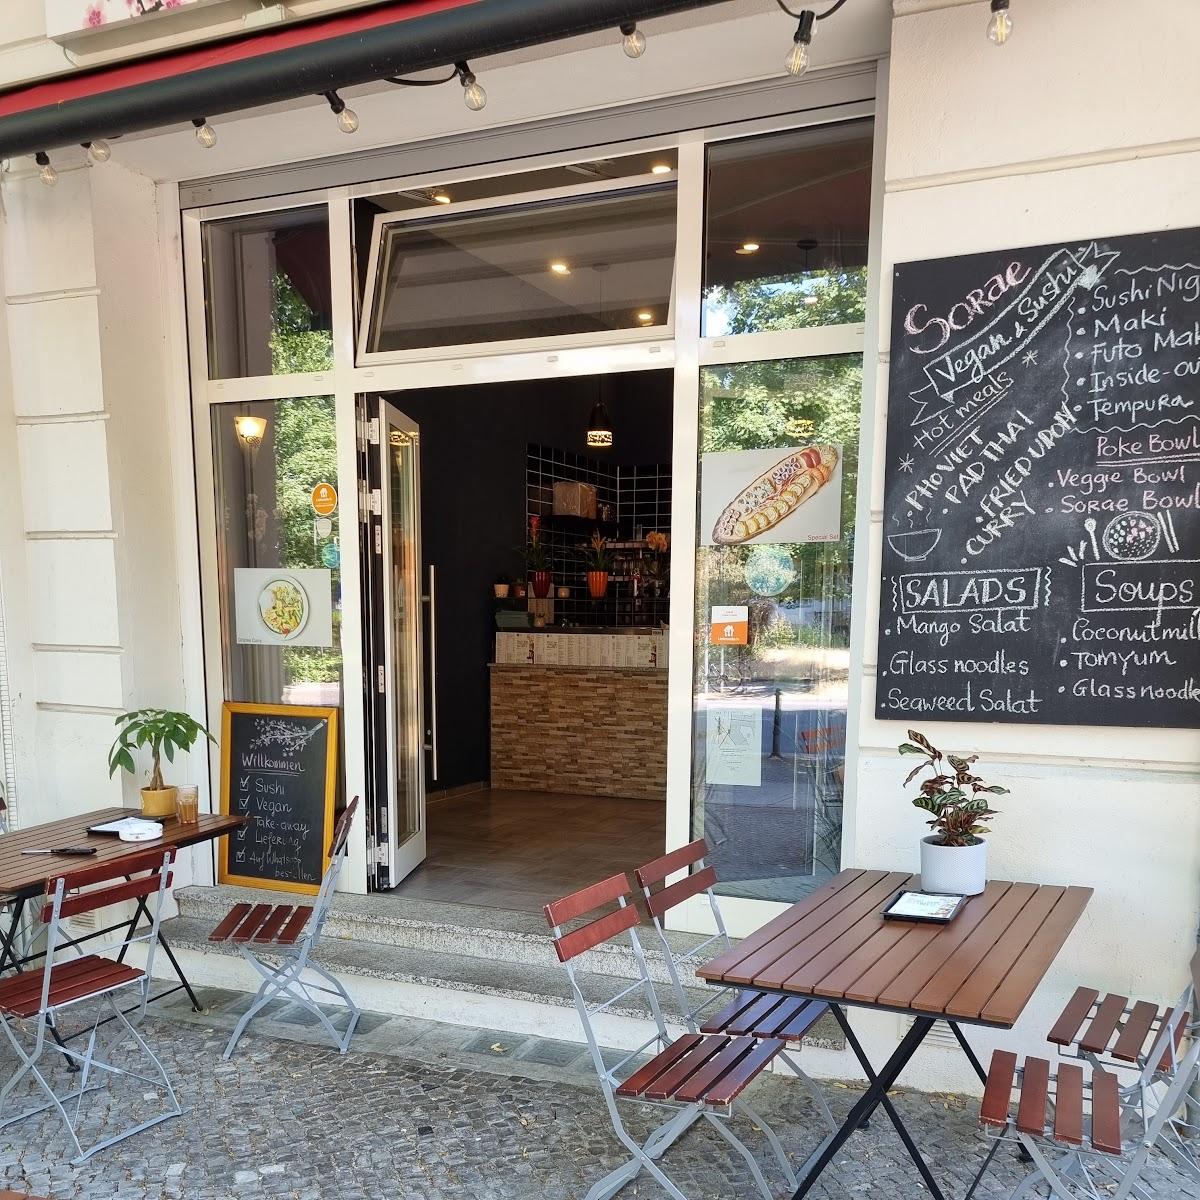 Restaurant "Sorae" in Berlin